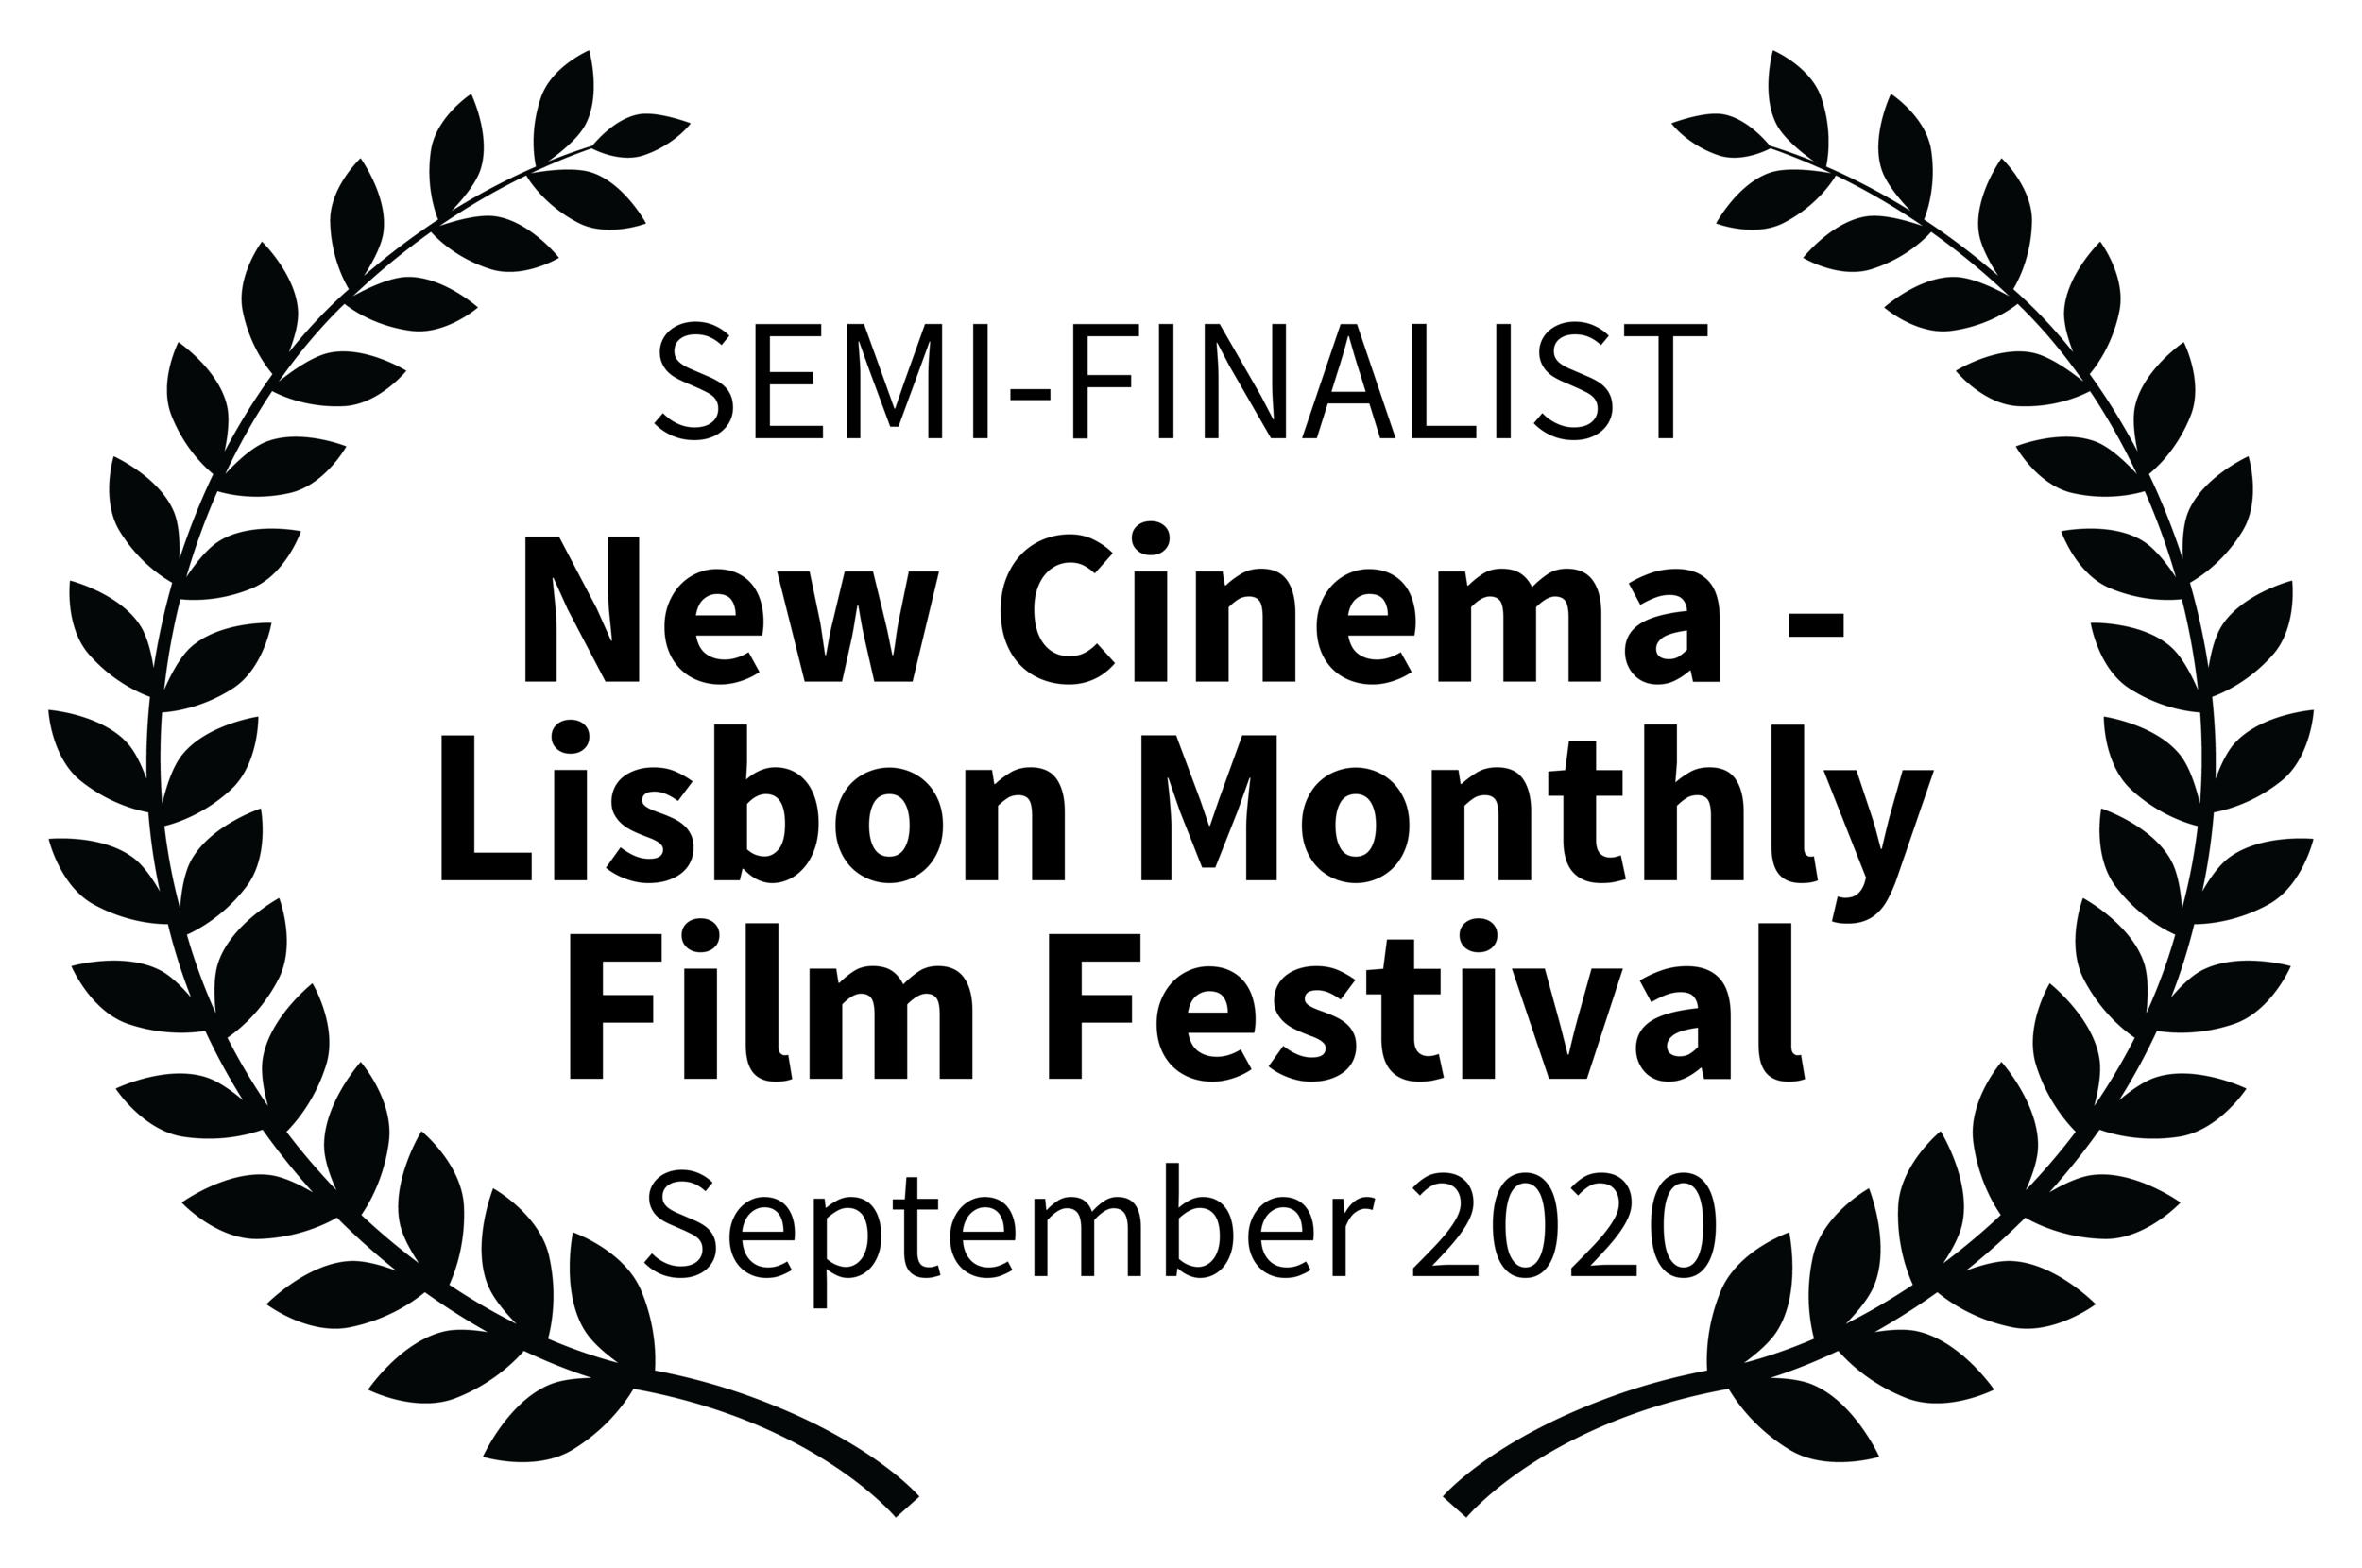 SEMI-FINALIST-NewCinema-LisbonMonthlyFilmFestival-September2020.png